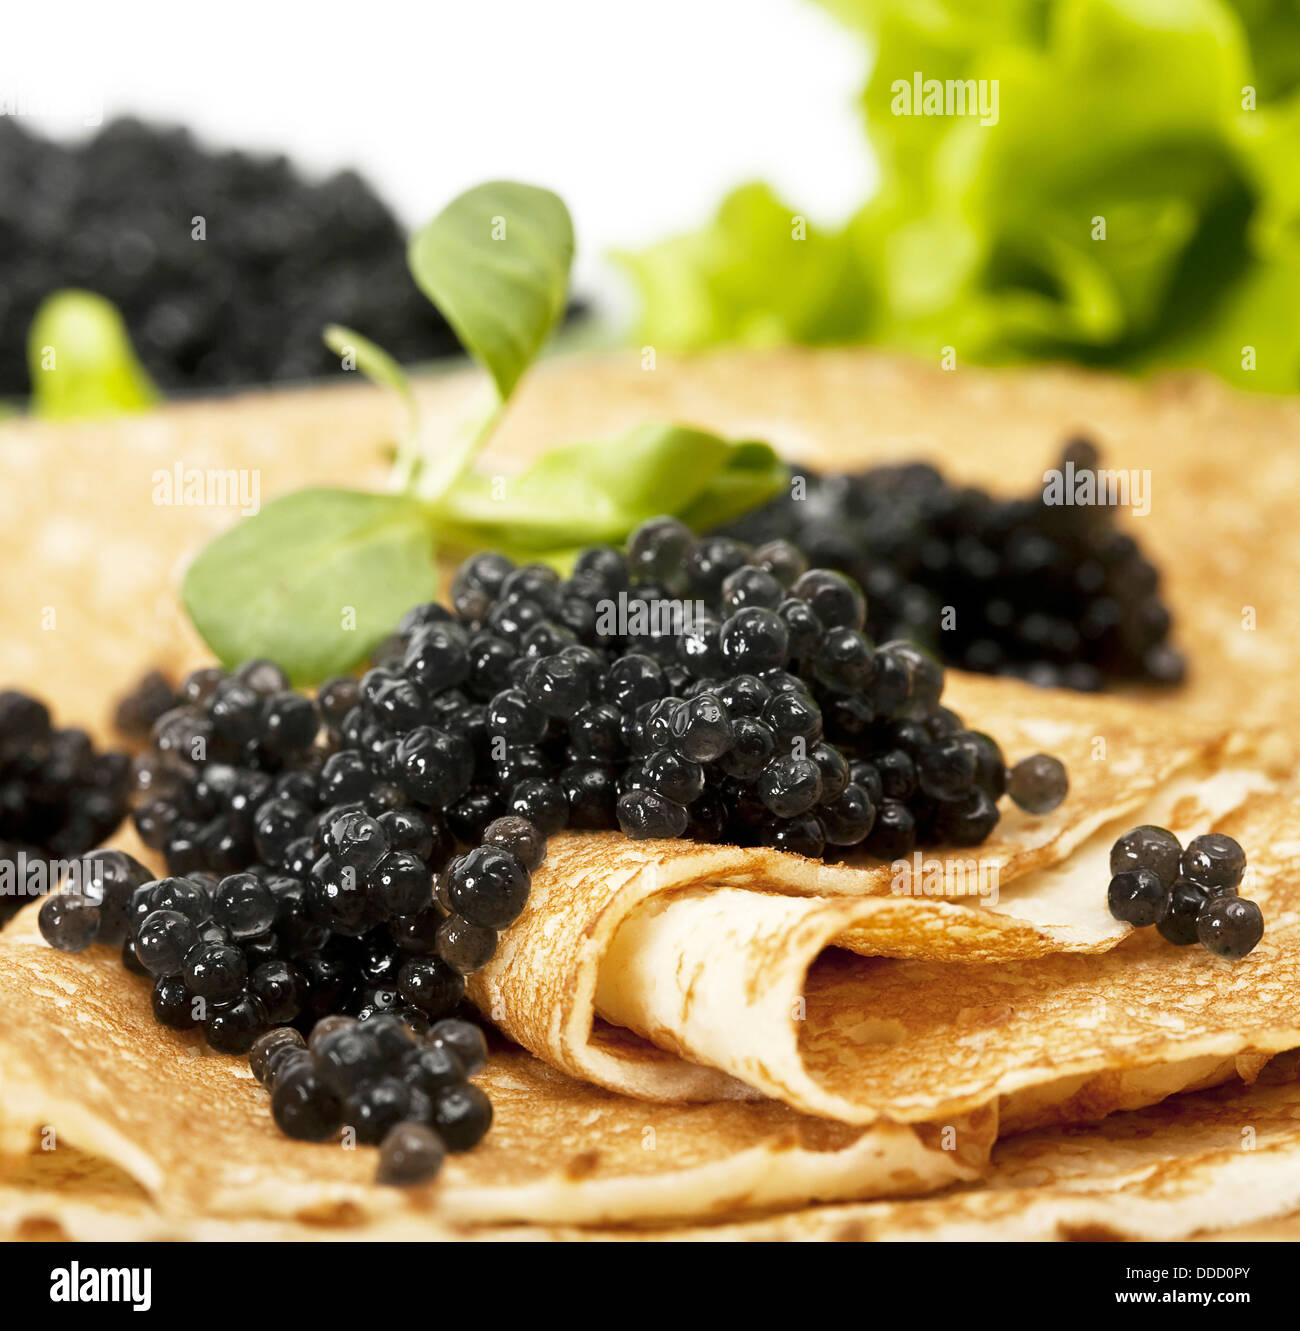 pancake with black caviar and greens Stock Photo